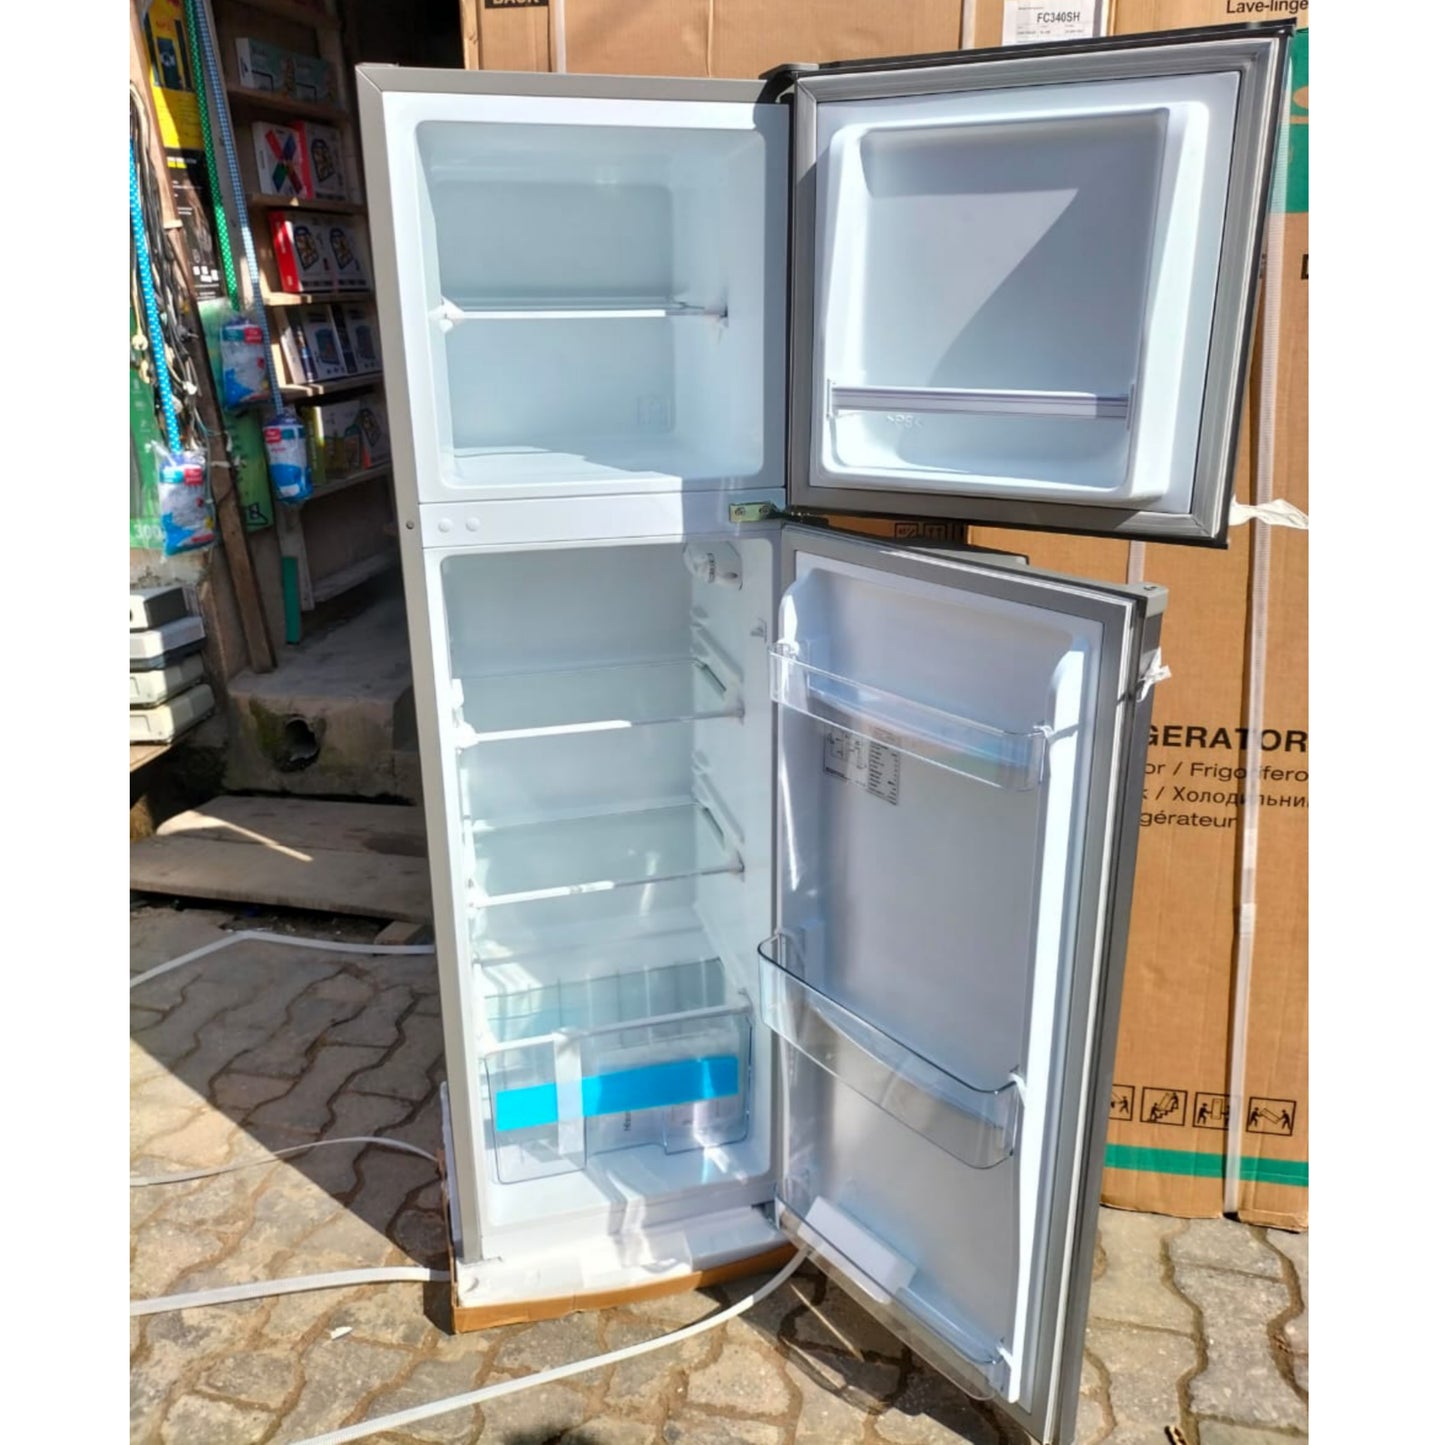 Hisense REF212DR 161L Double Door Top-Freezer and bottom Refrigerator - Brand New